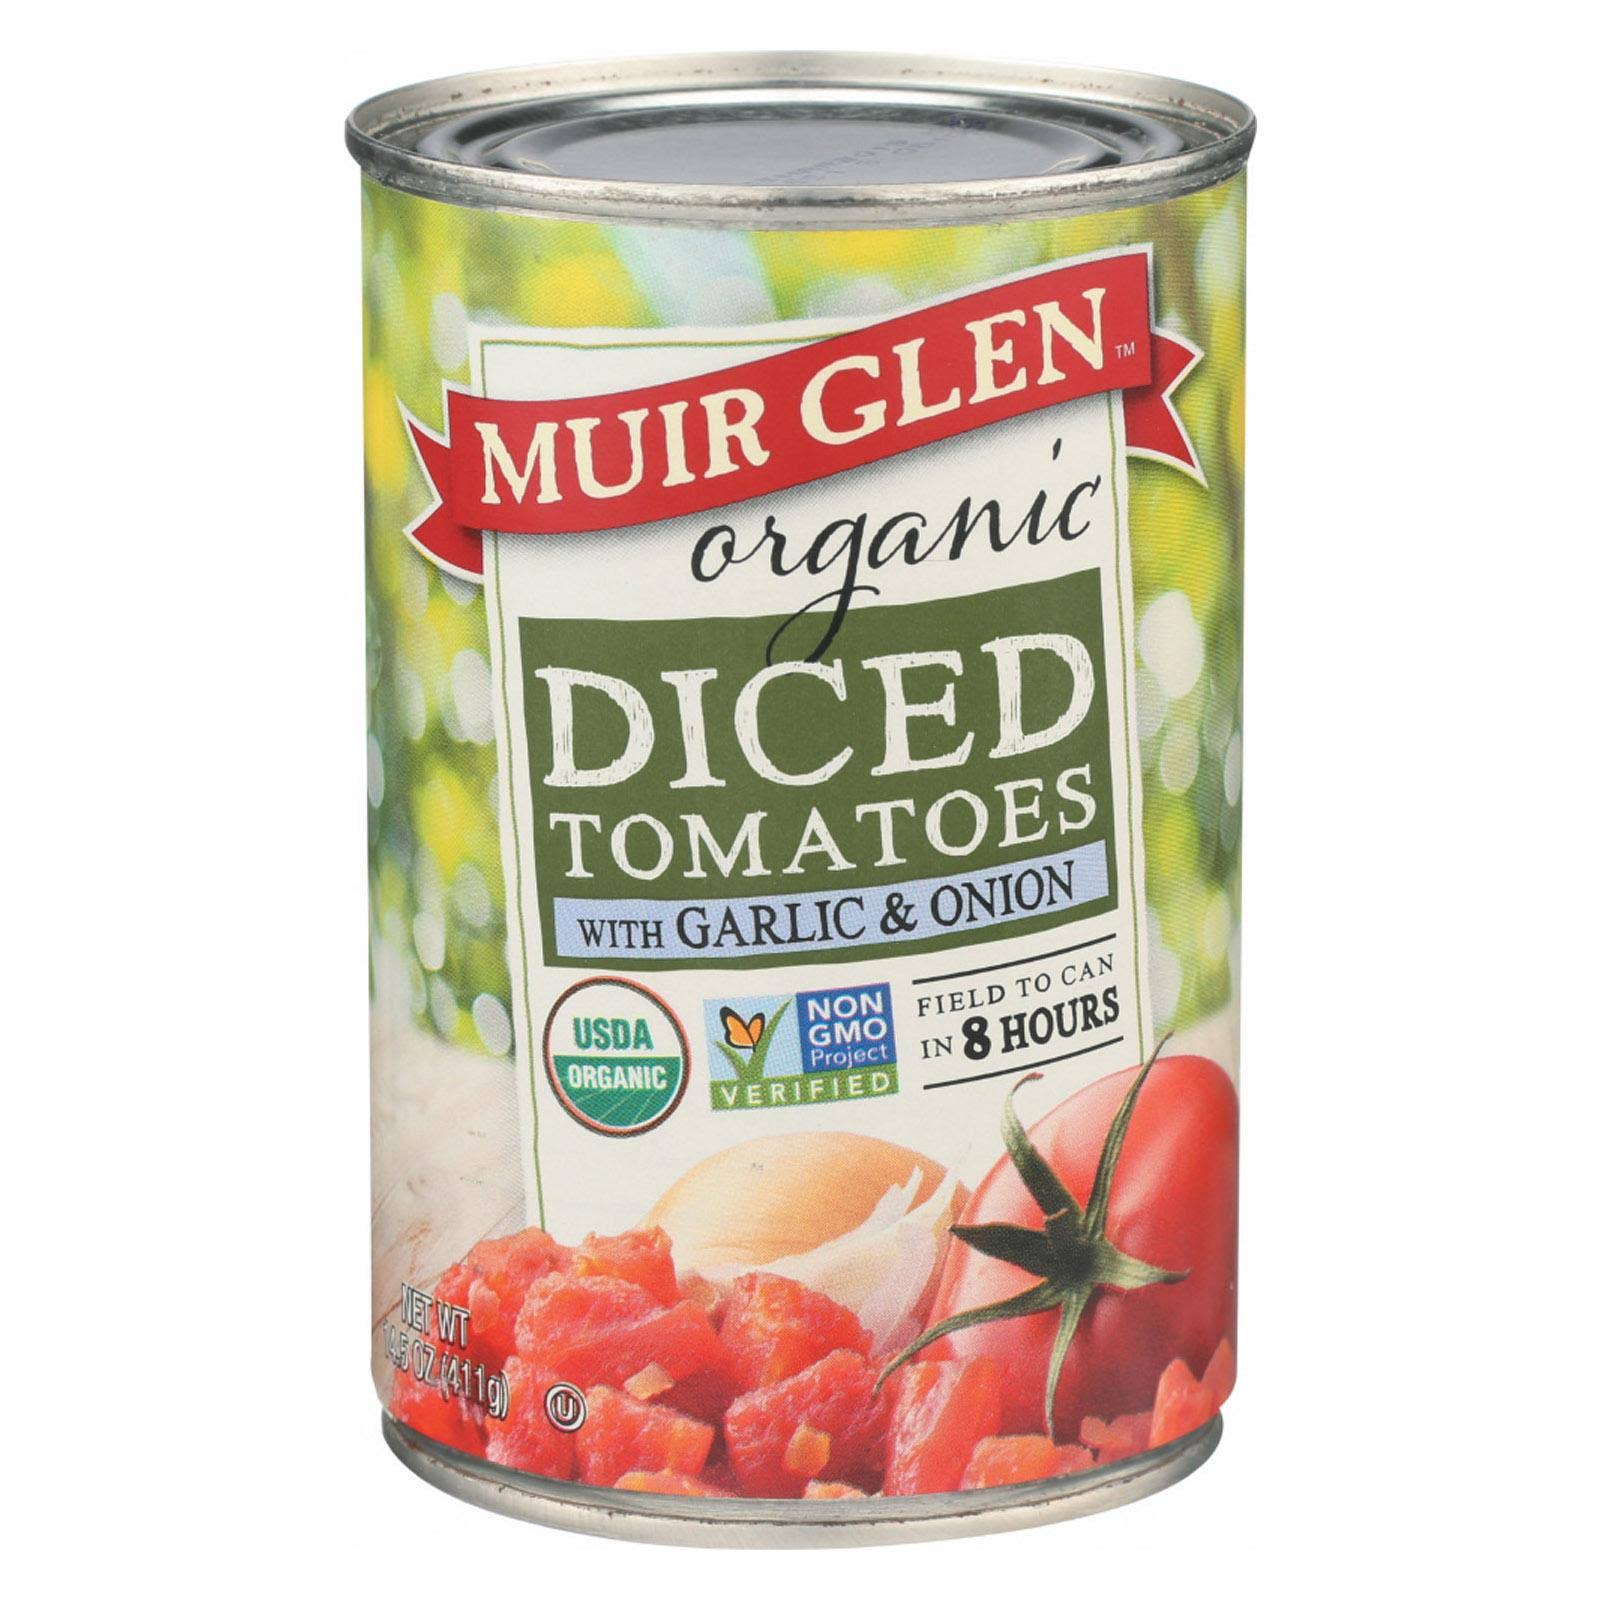 Muir Glen Organic Diced Tomatoes - with Garlic and Onion, 14.5oz